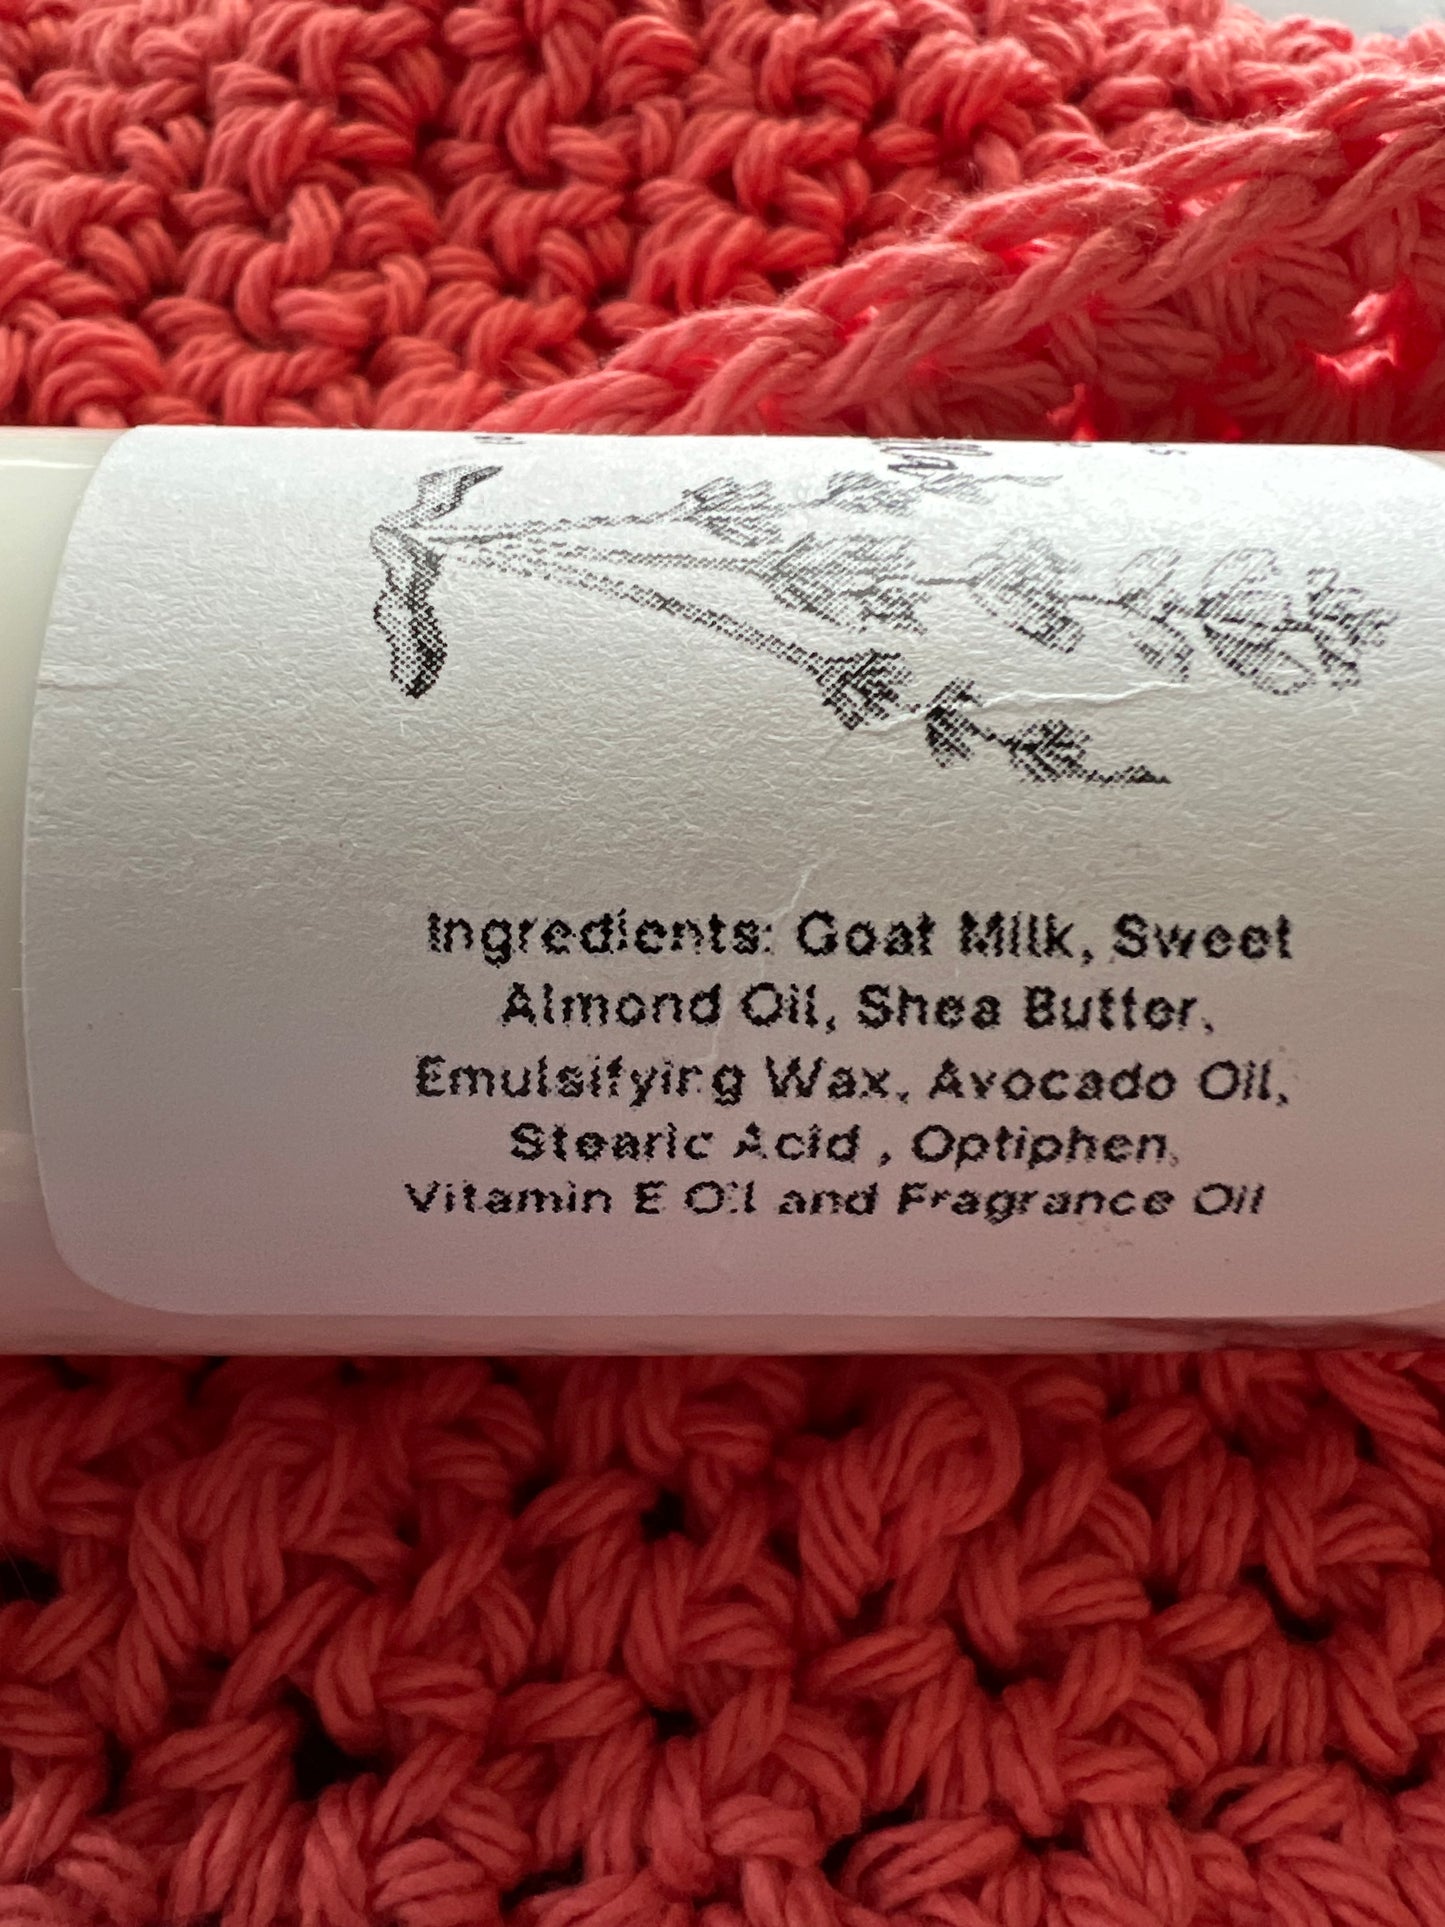 Goat Milk Lotion - Oatmeal Milk & Honey